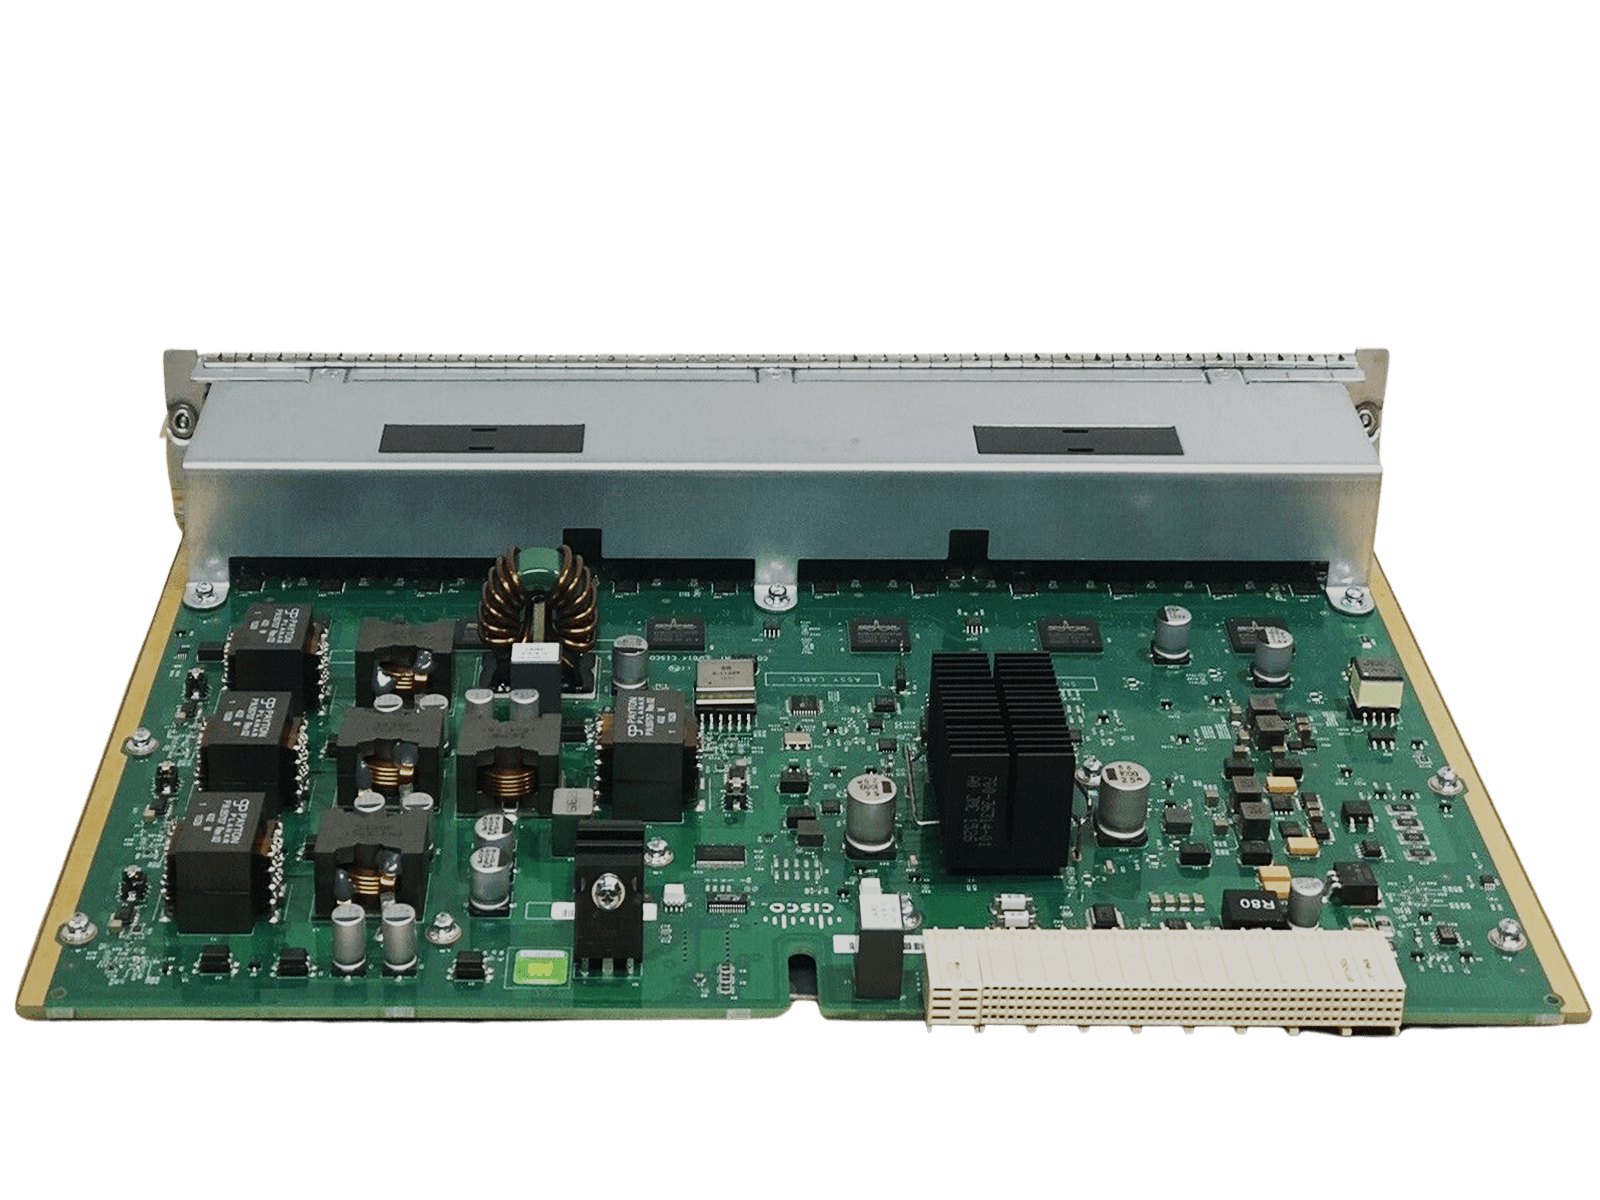 Cisco Catalyst WS-X4748-UPOE+E 4500-E Series UPoE Switch Line Card 48 Ports 1GbE.